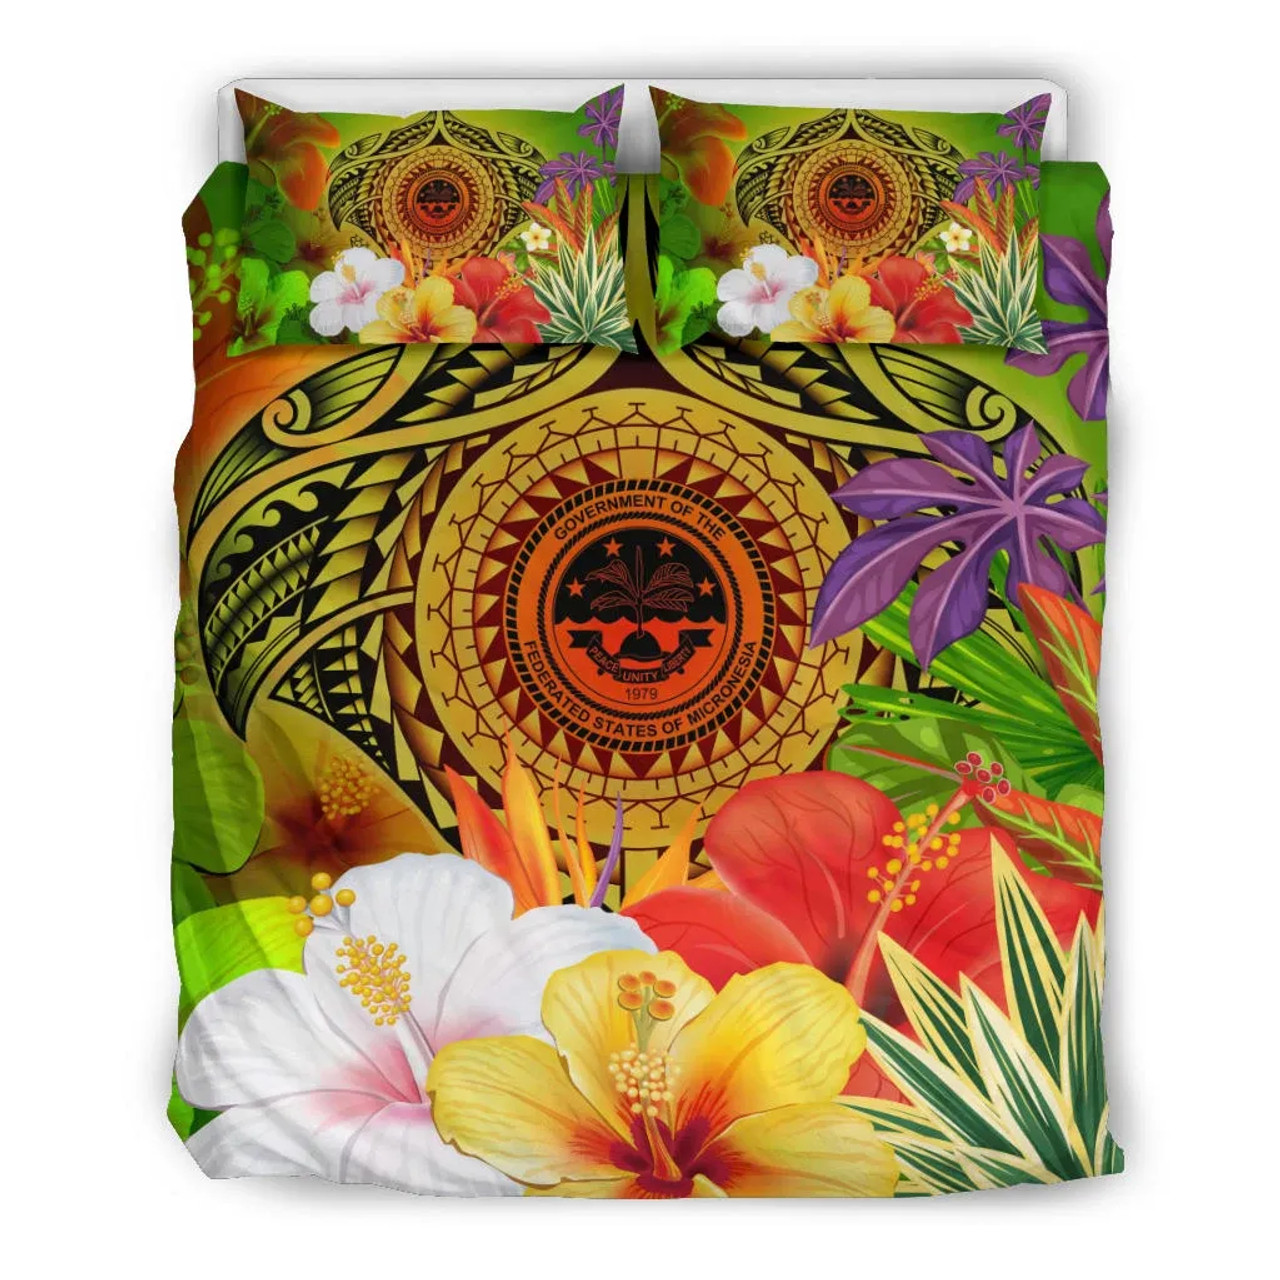 FSM Polynesian Bedding Set - Manta Ray Tropical Flowers (Reggae) 3